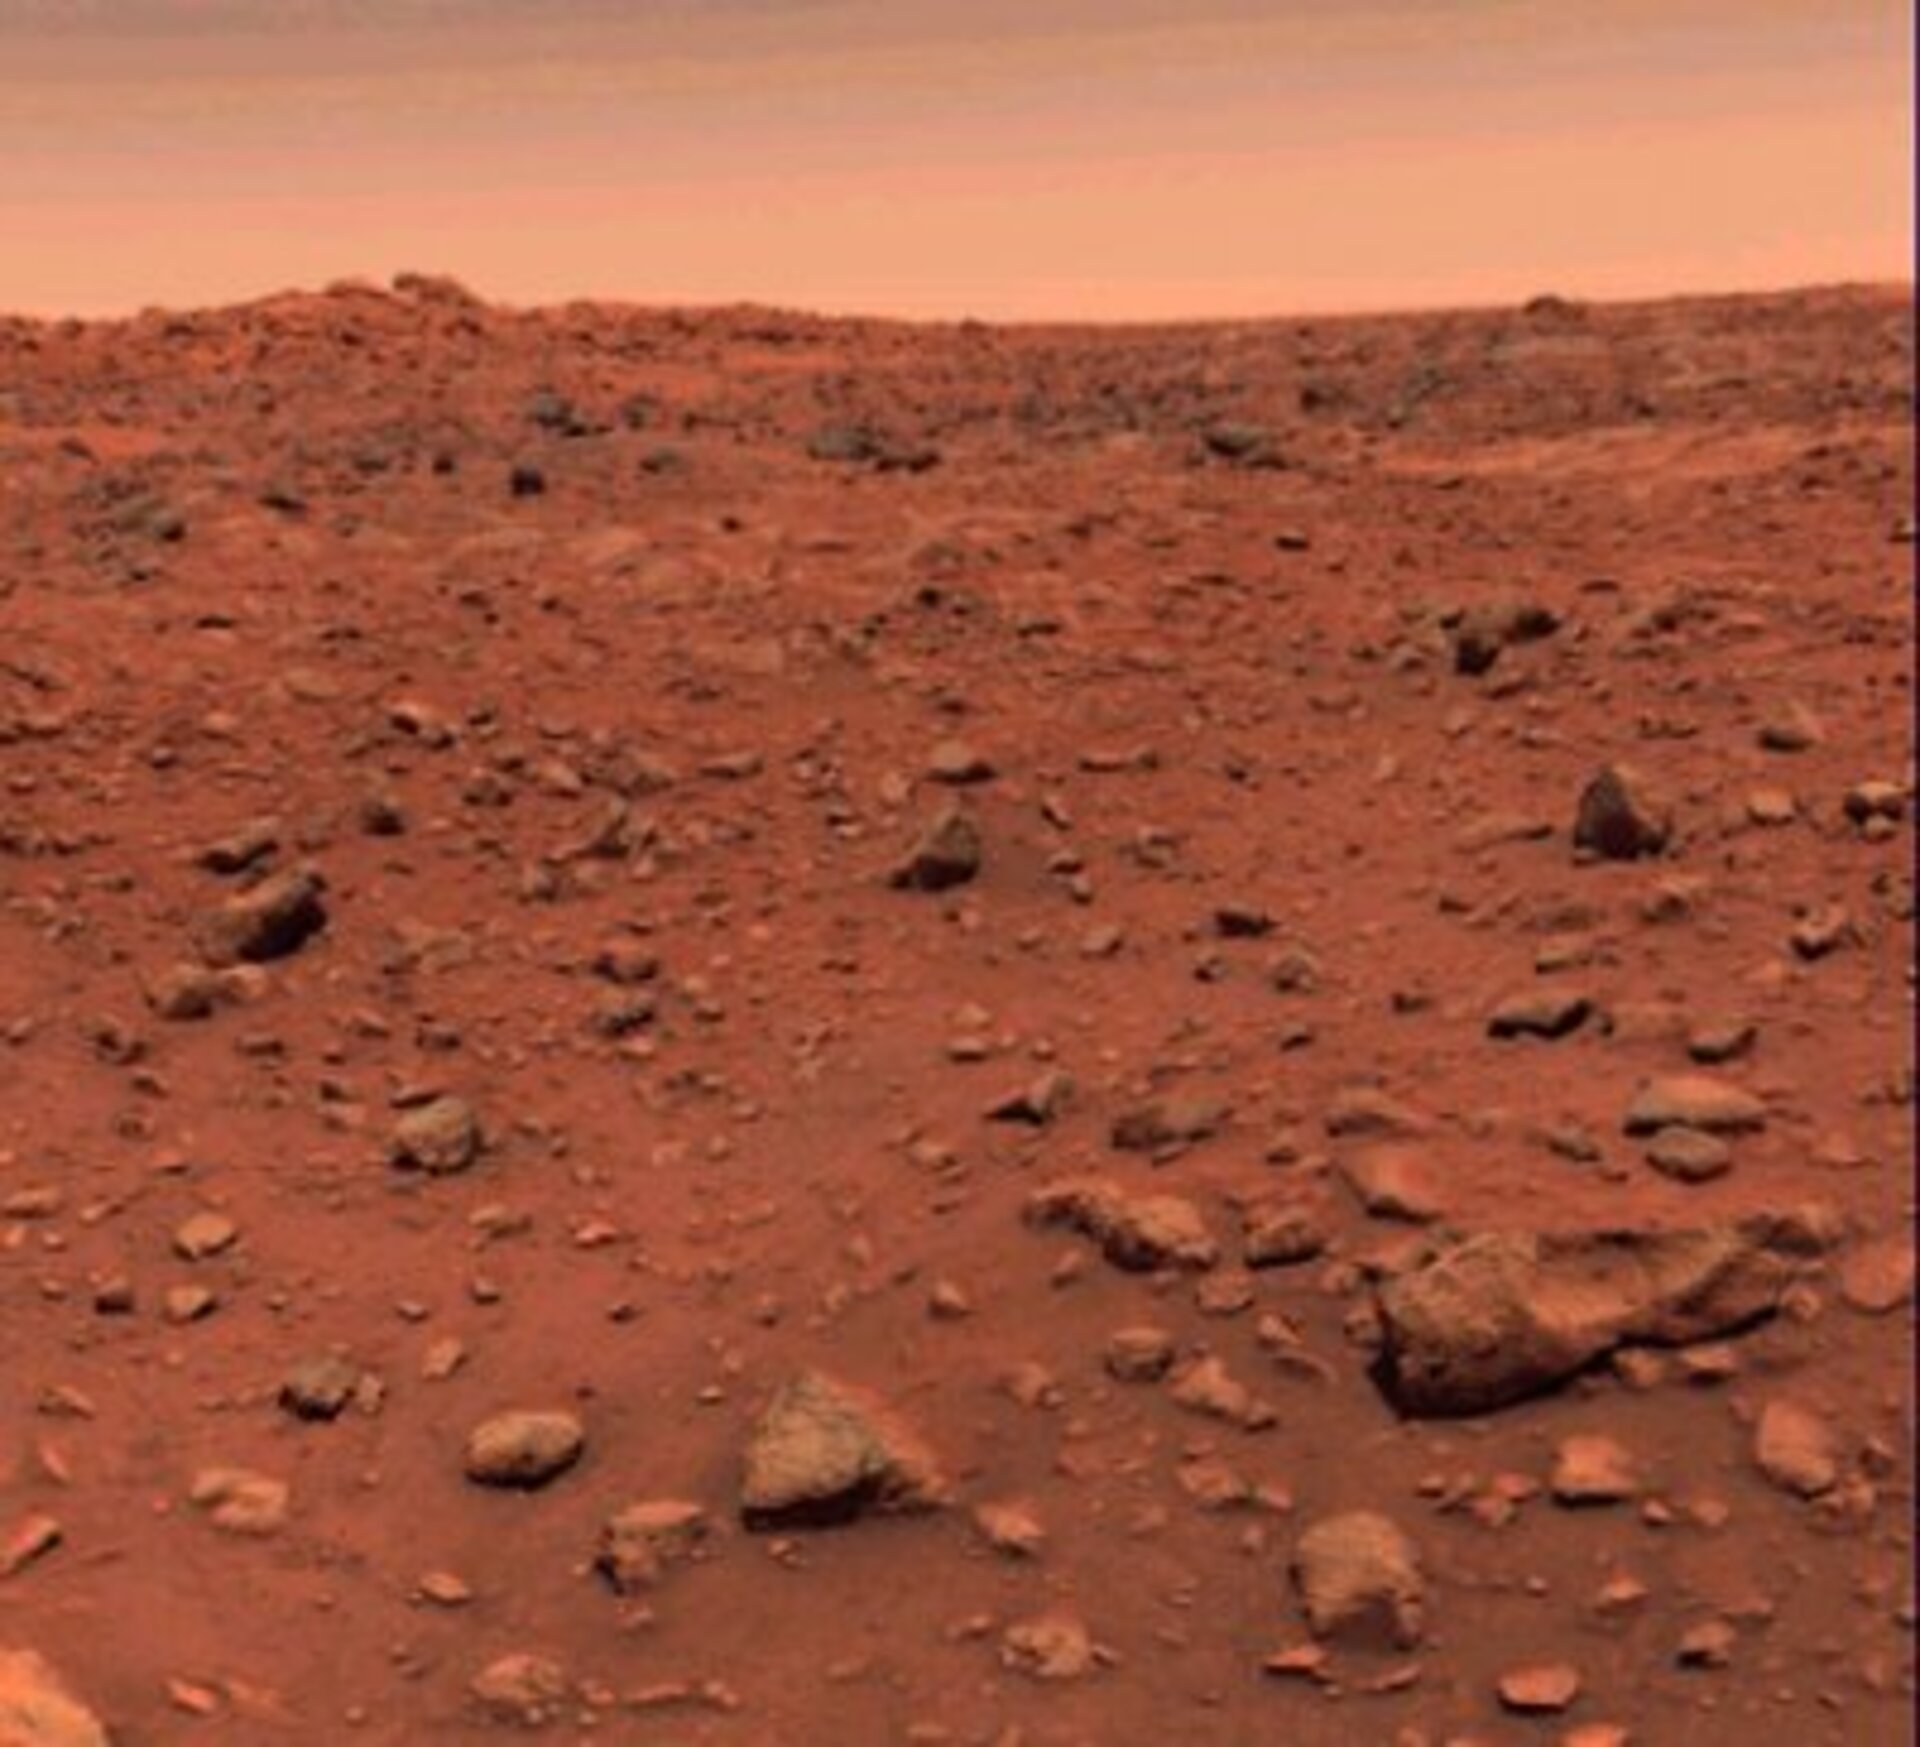 The Viking lander view of Mars